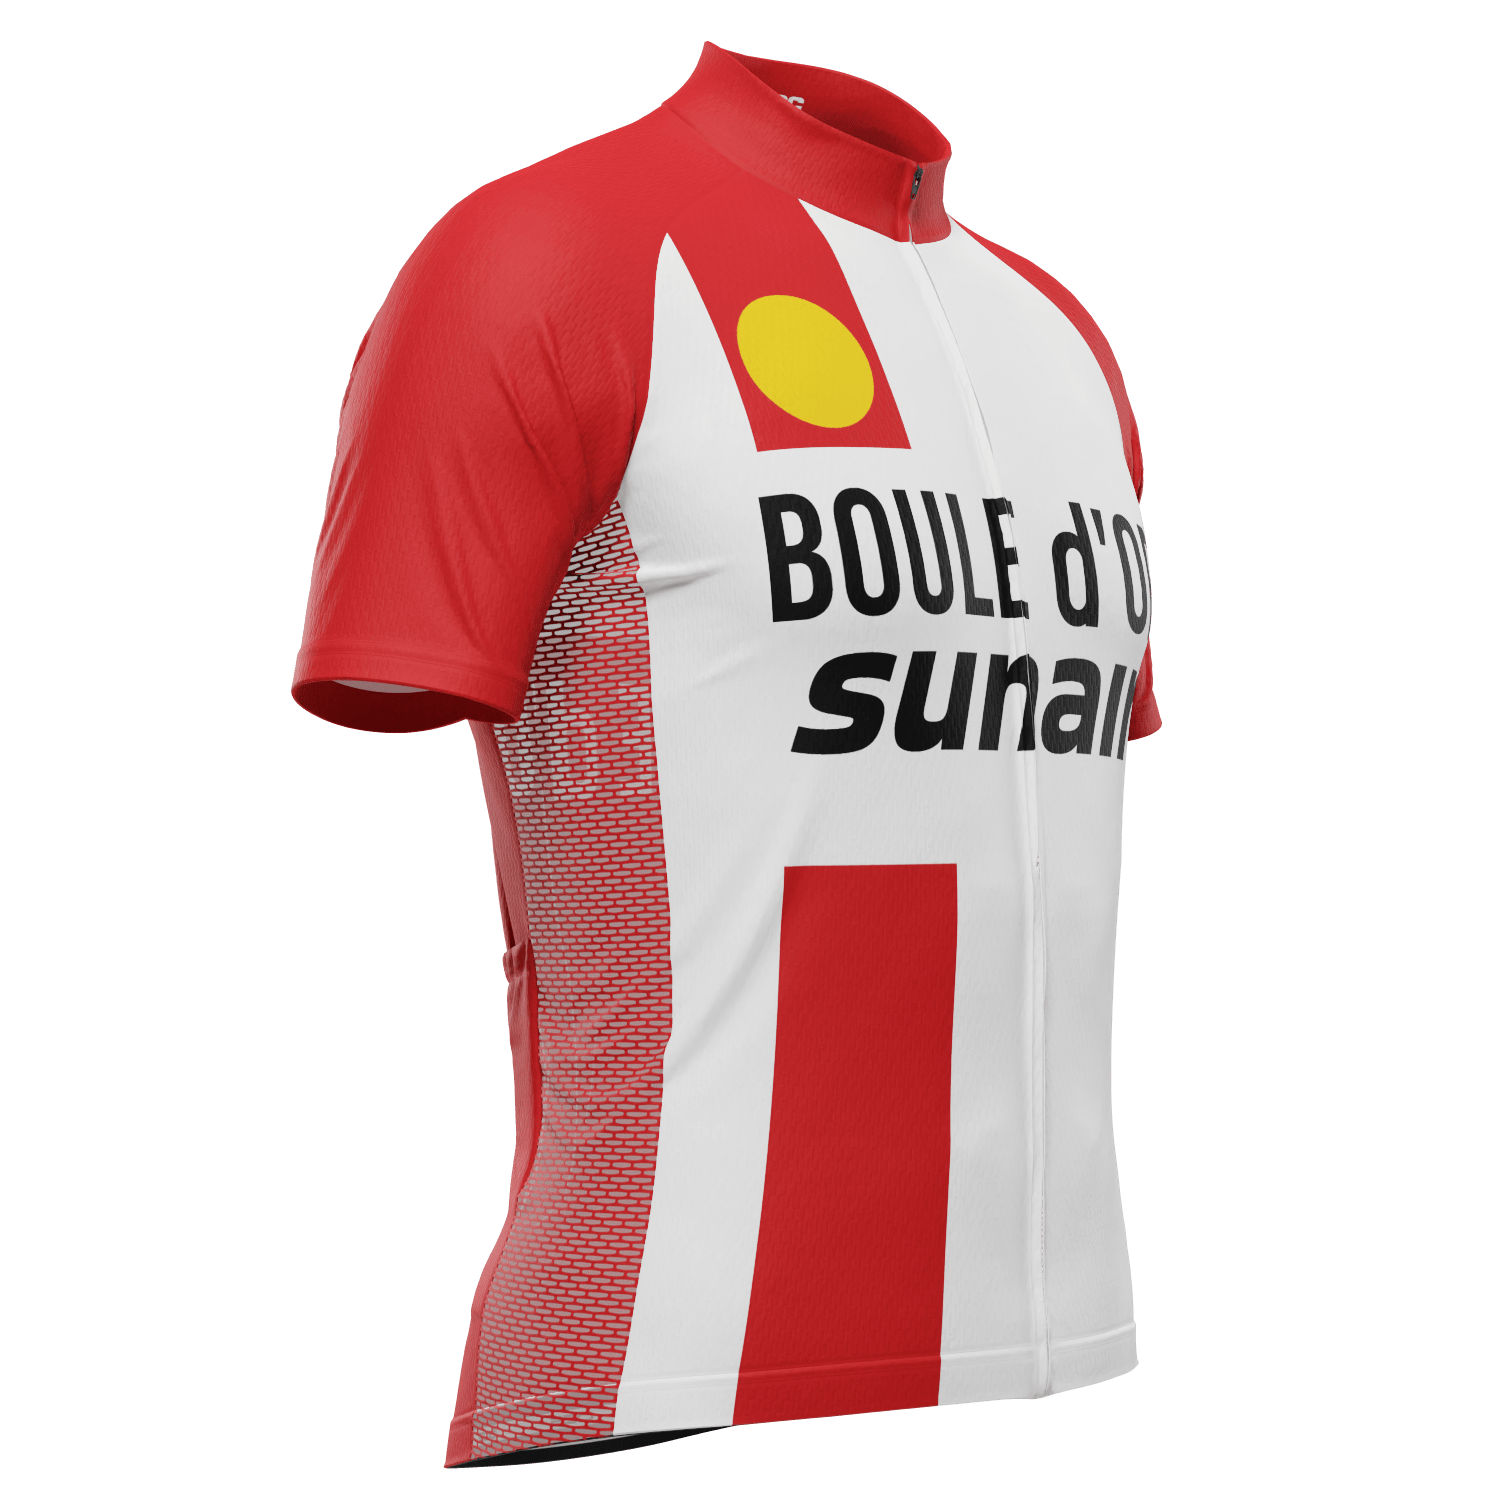 Men's Boule d'Or Sunair Short Sleeve Cycling Jersey